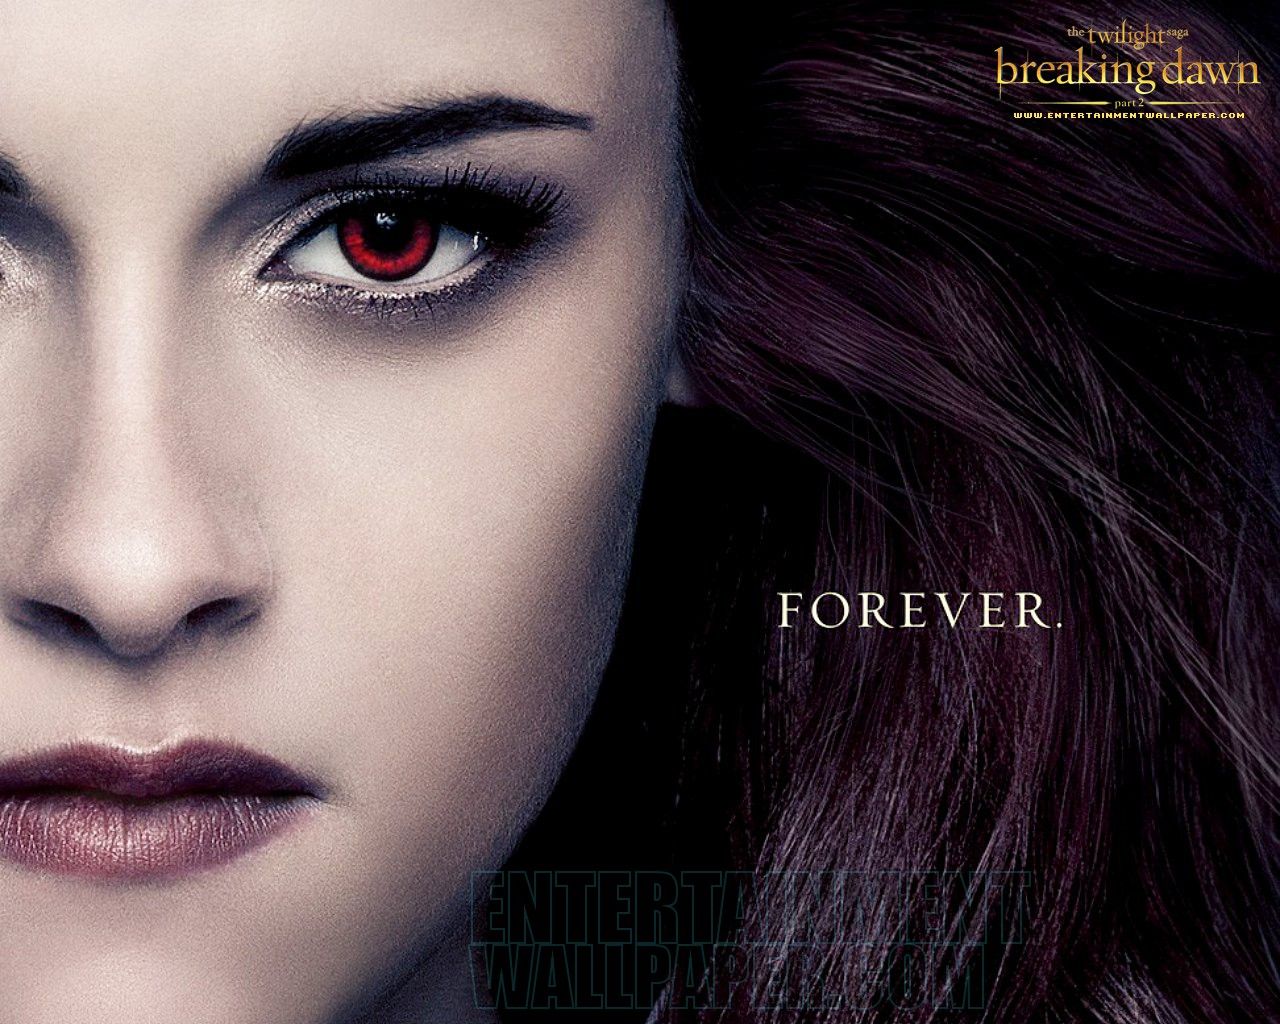 The Twilight Saga's Breaking Dawn Part II Wallpaper - #10032134 ...